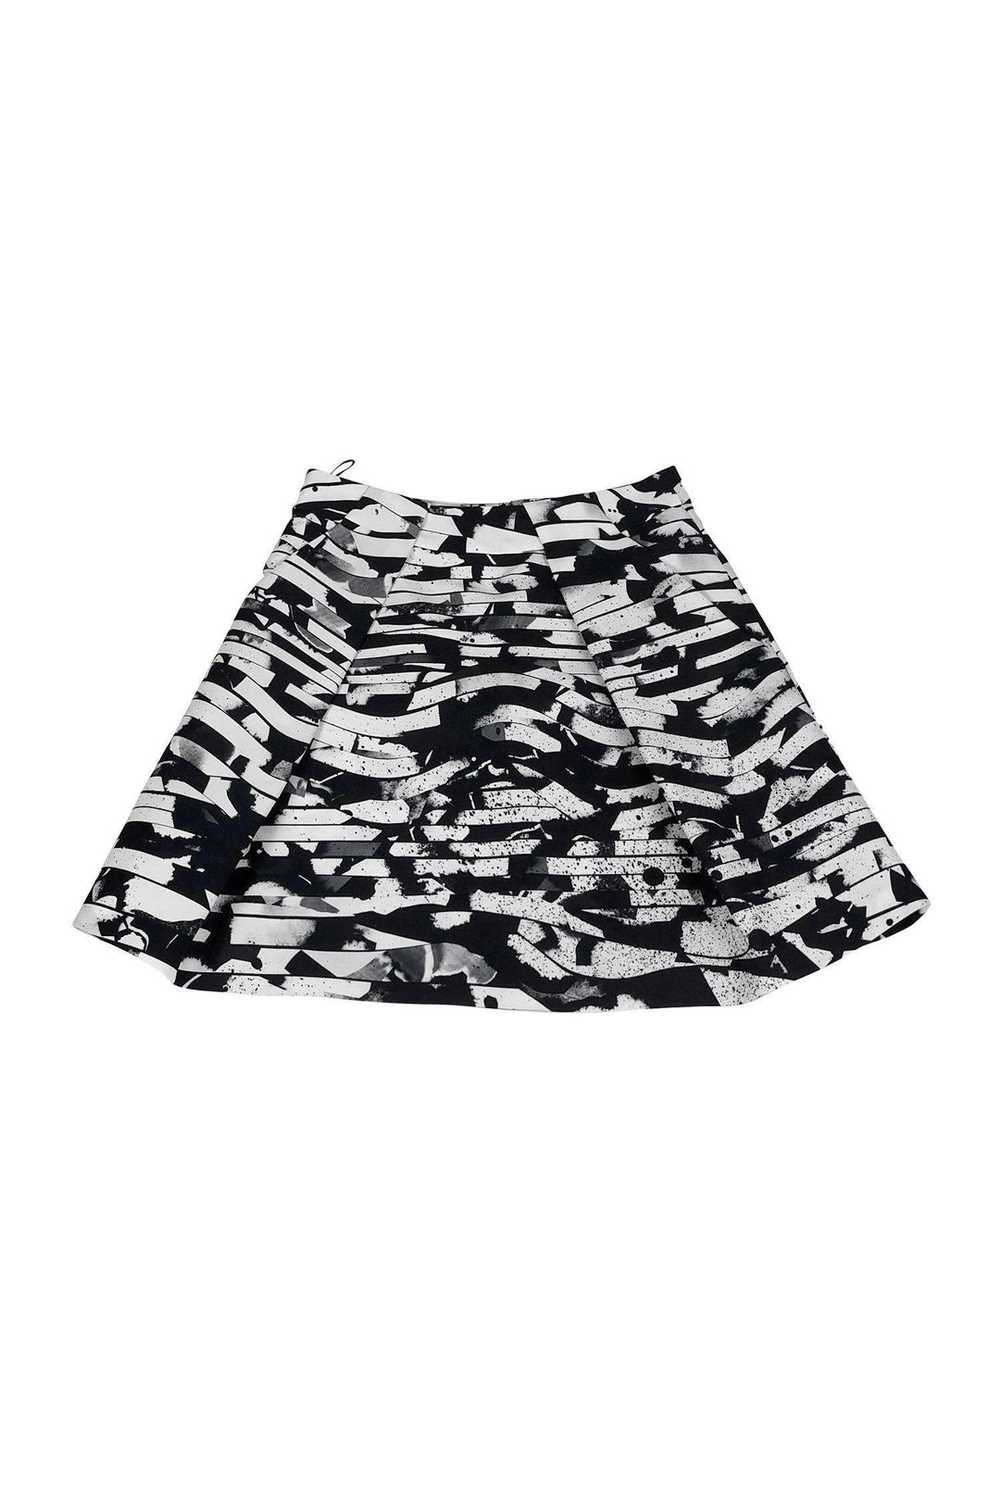 Kenzo - Black & White Flared Skirt Sz 0 - image 2